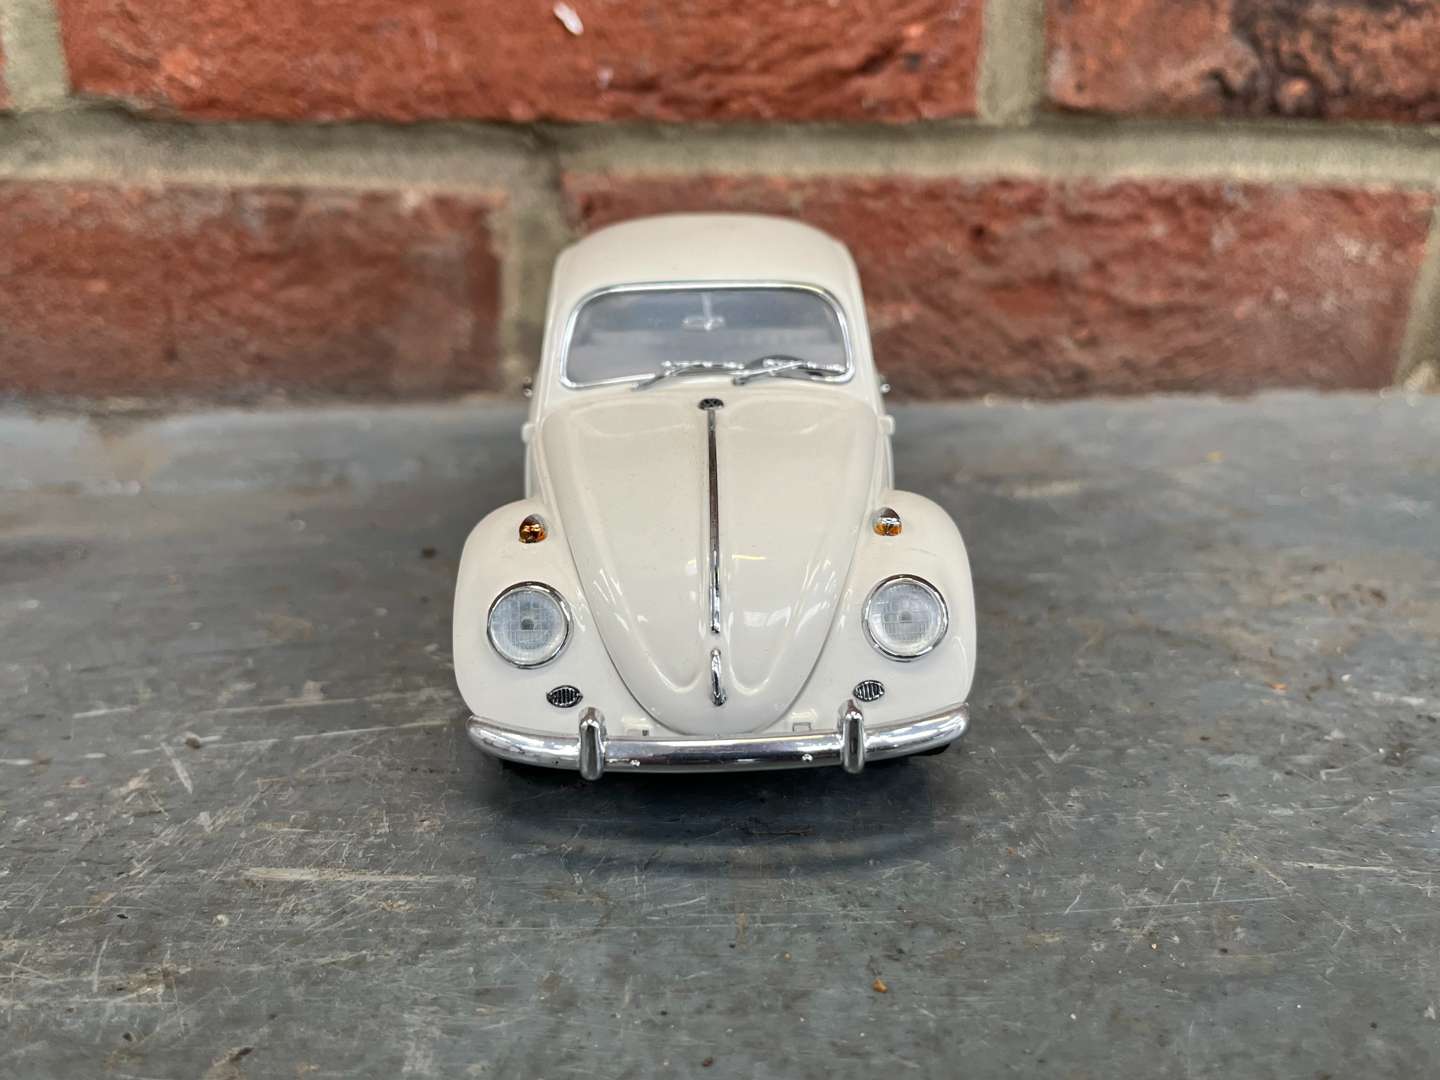 <p>VW Beetle Model Car By Franklin Mint&nbsp;&nbsp;</p>